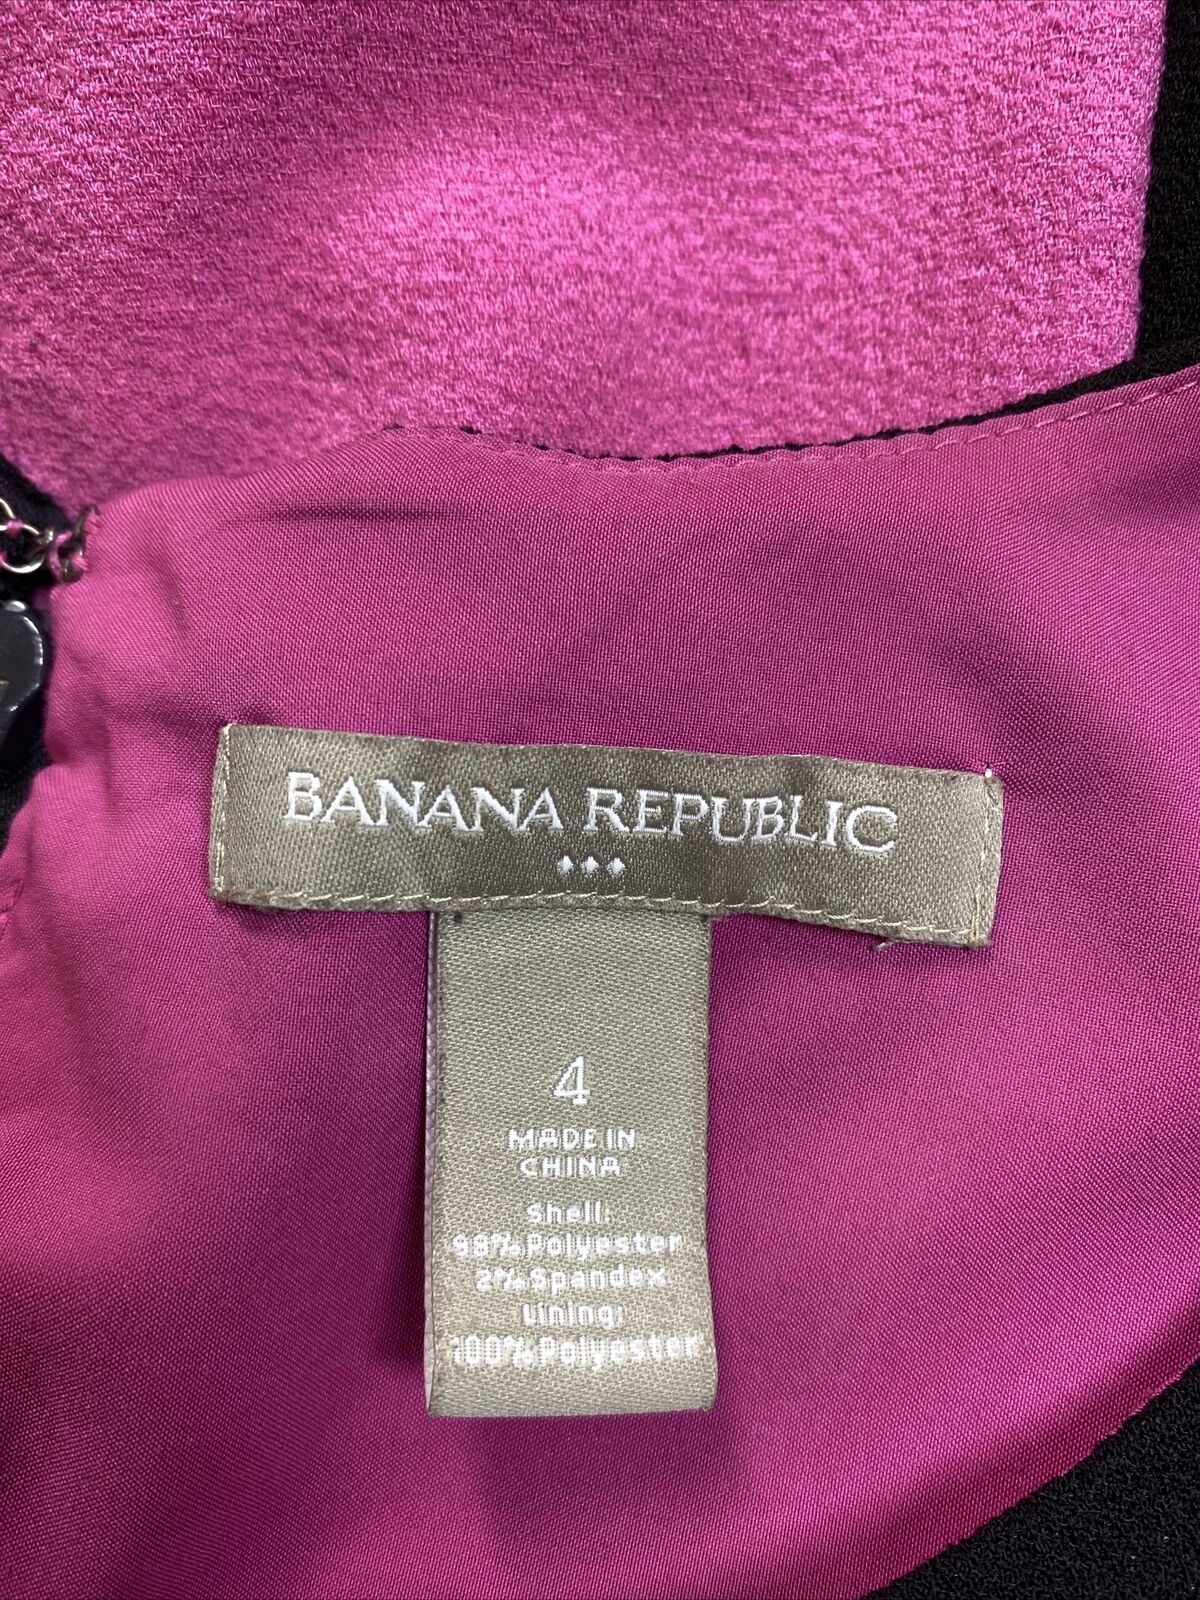 Banana Republic Women's Black/Pink Sleeveless Knee Length Shift Dress - 4